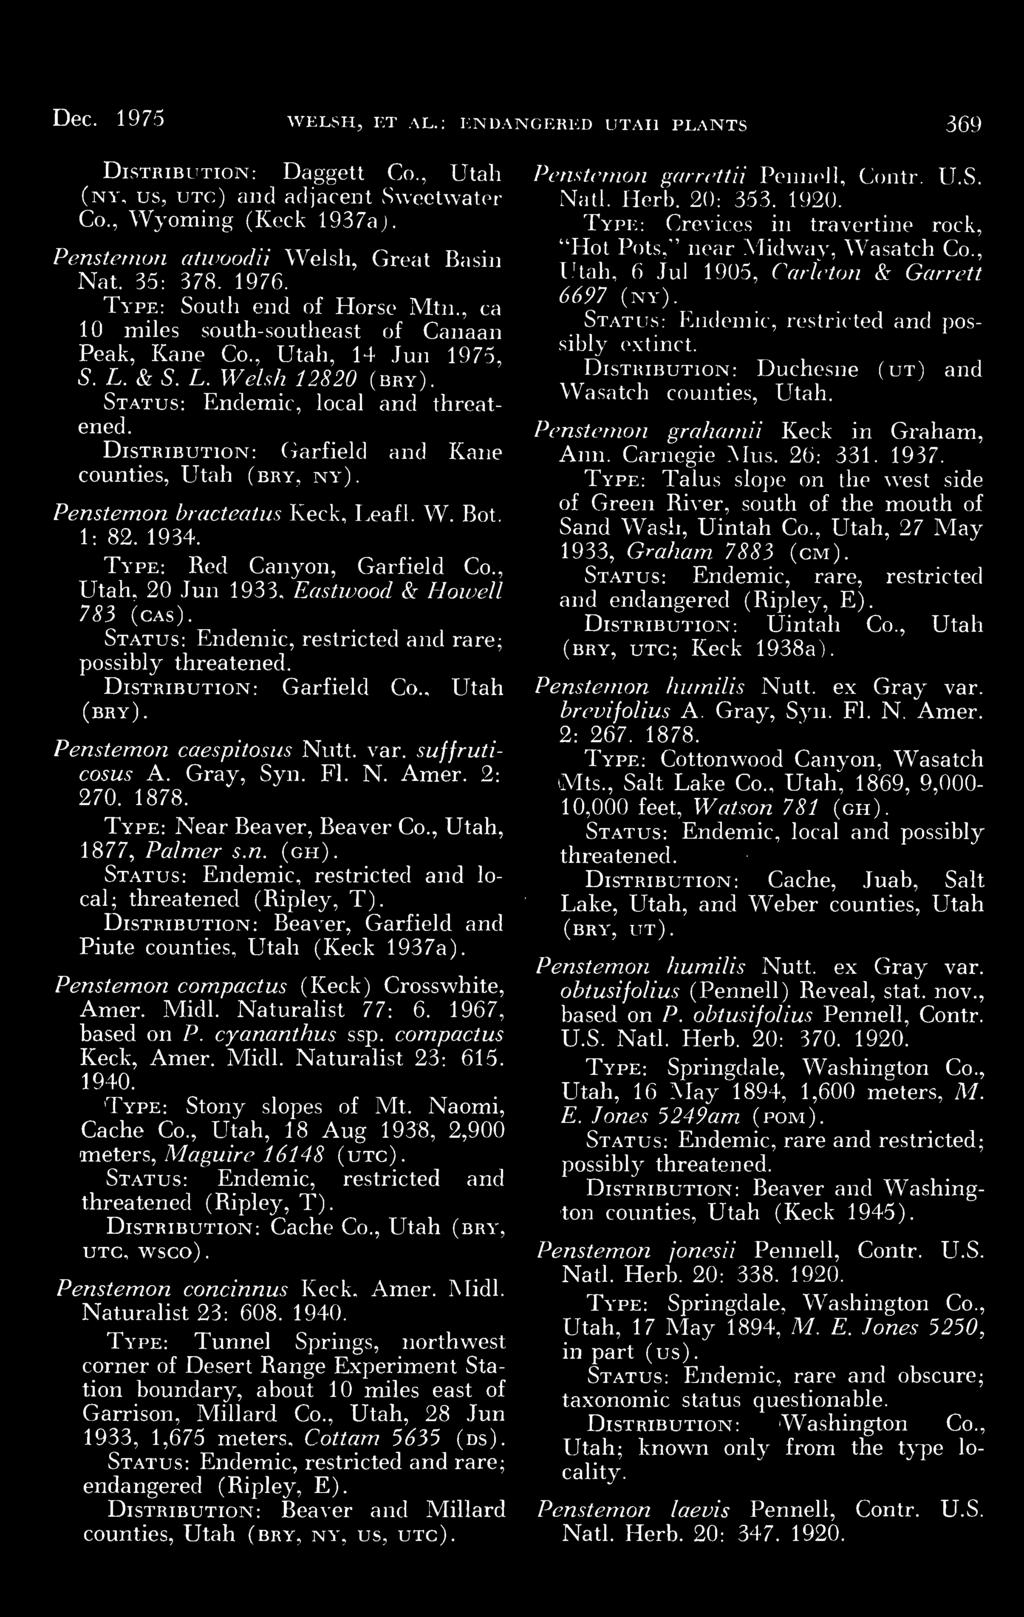 Status: Endemic, restricted and local; threatened (Ripley, T) Distribution: Beaver, Garfield and Piute counties, Utah (Keck 1937a) Penstemon compactus (Keck) Crosswhite, Amer Midi Naturahst 77: 6